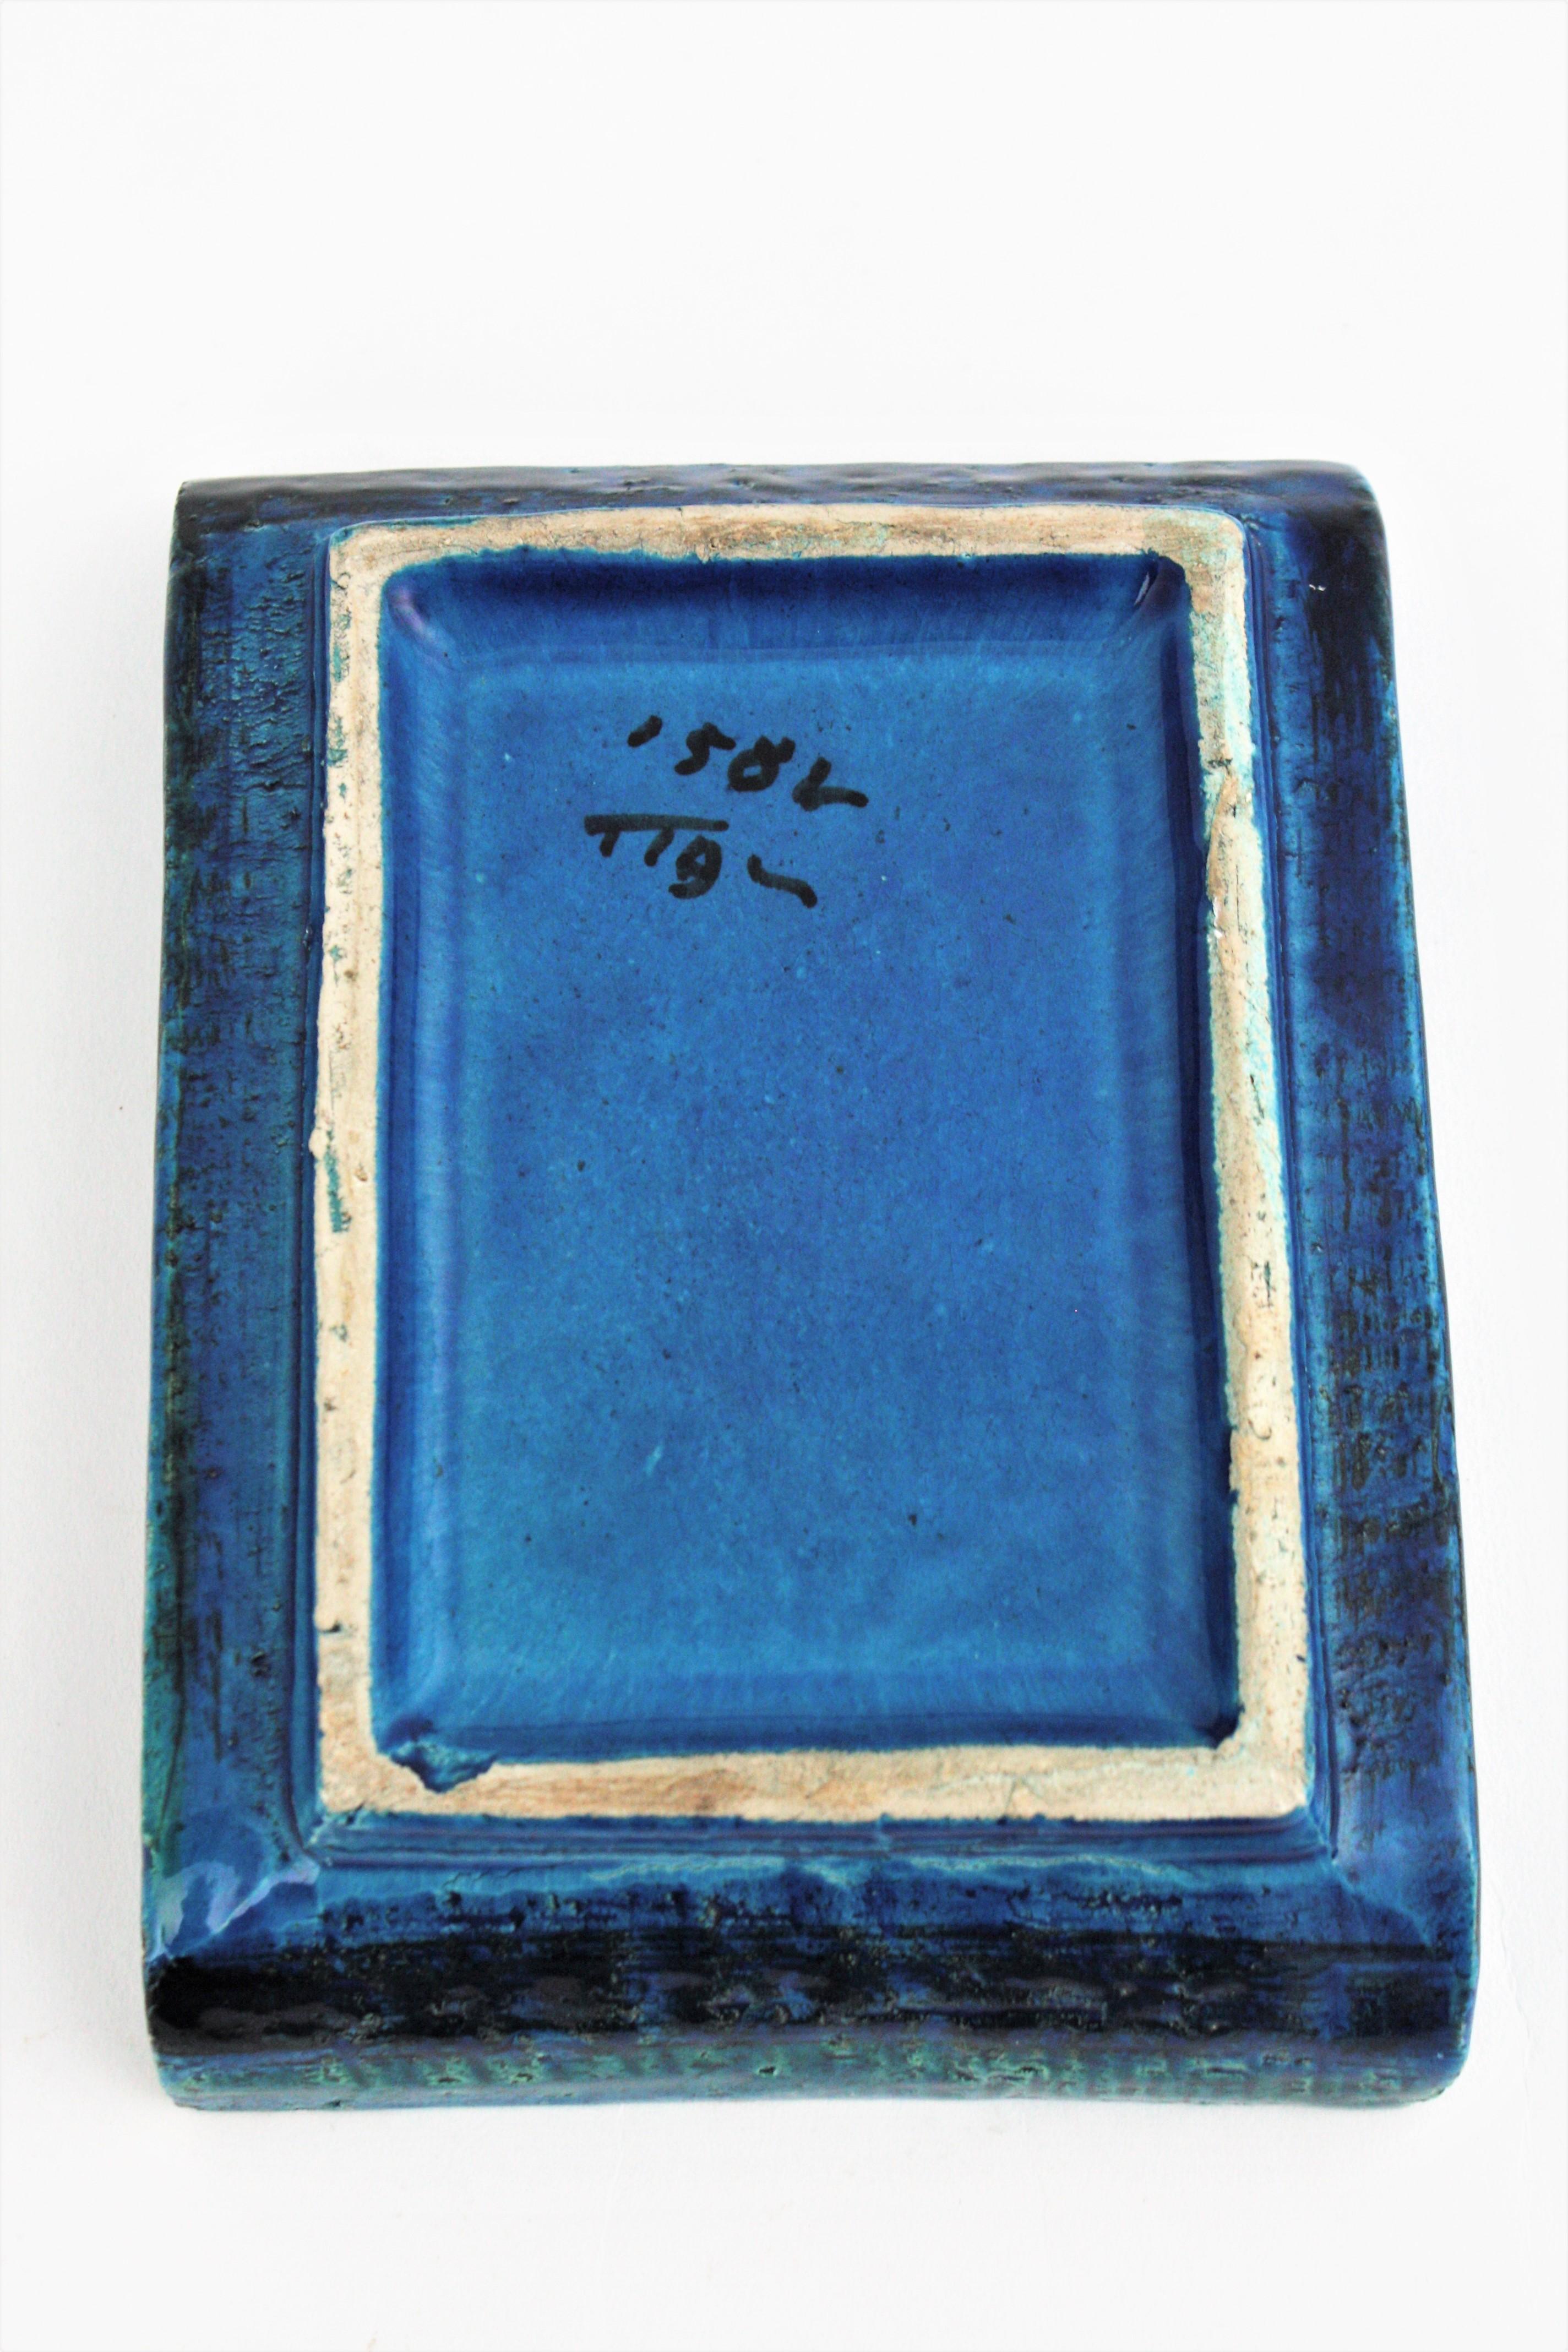 Aldo Londi Bitossi Rimini Blue Glazed Ceramic Rectangular Bowl  5